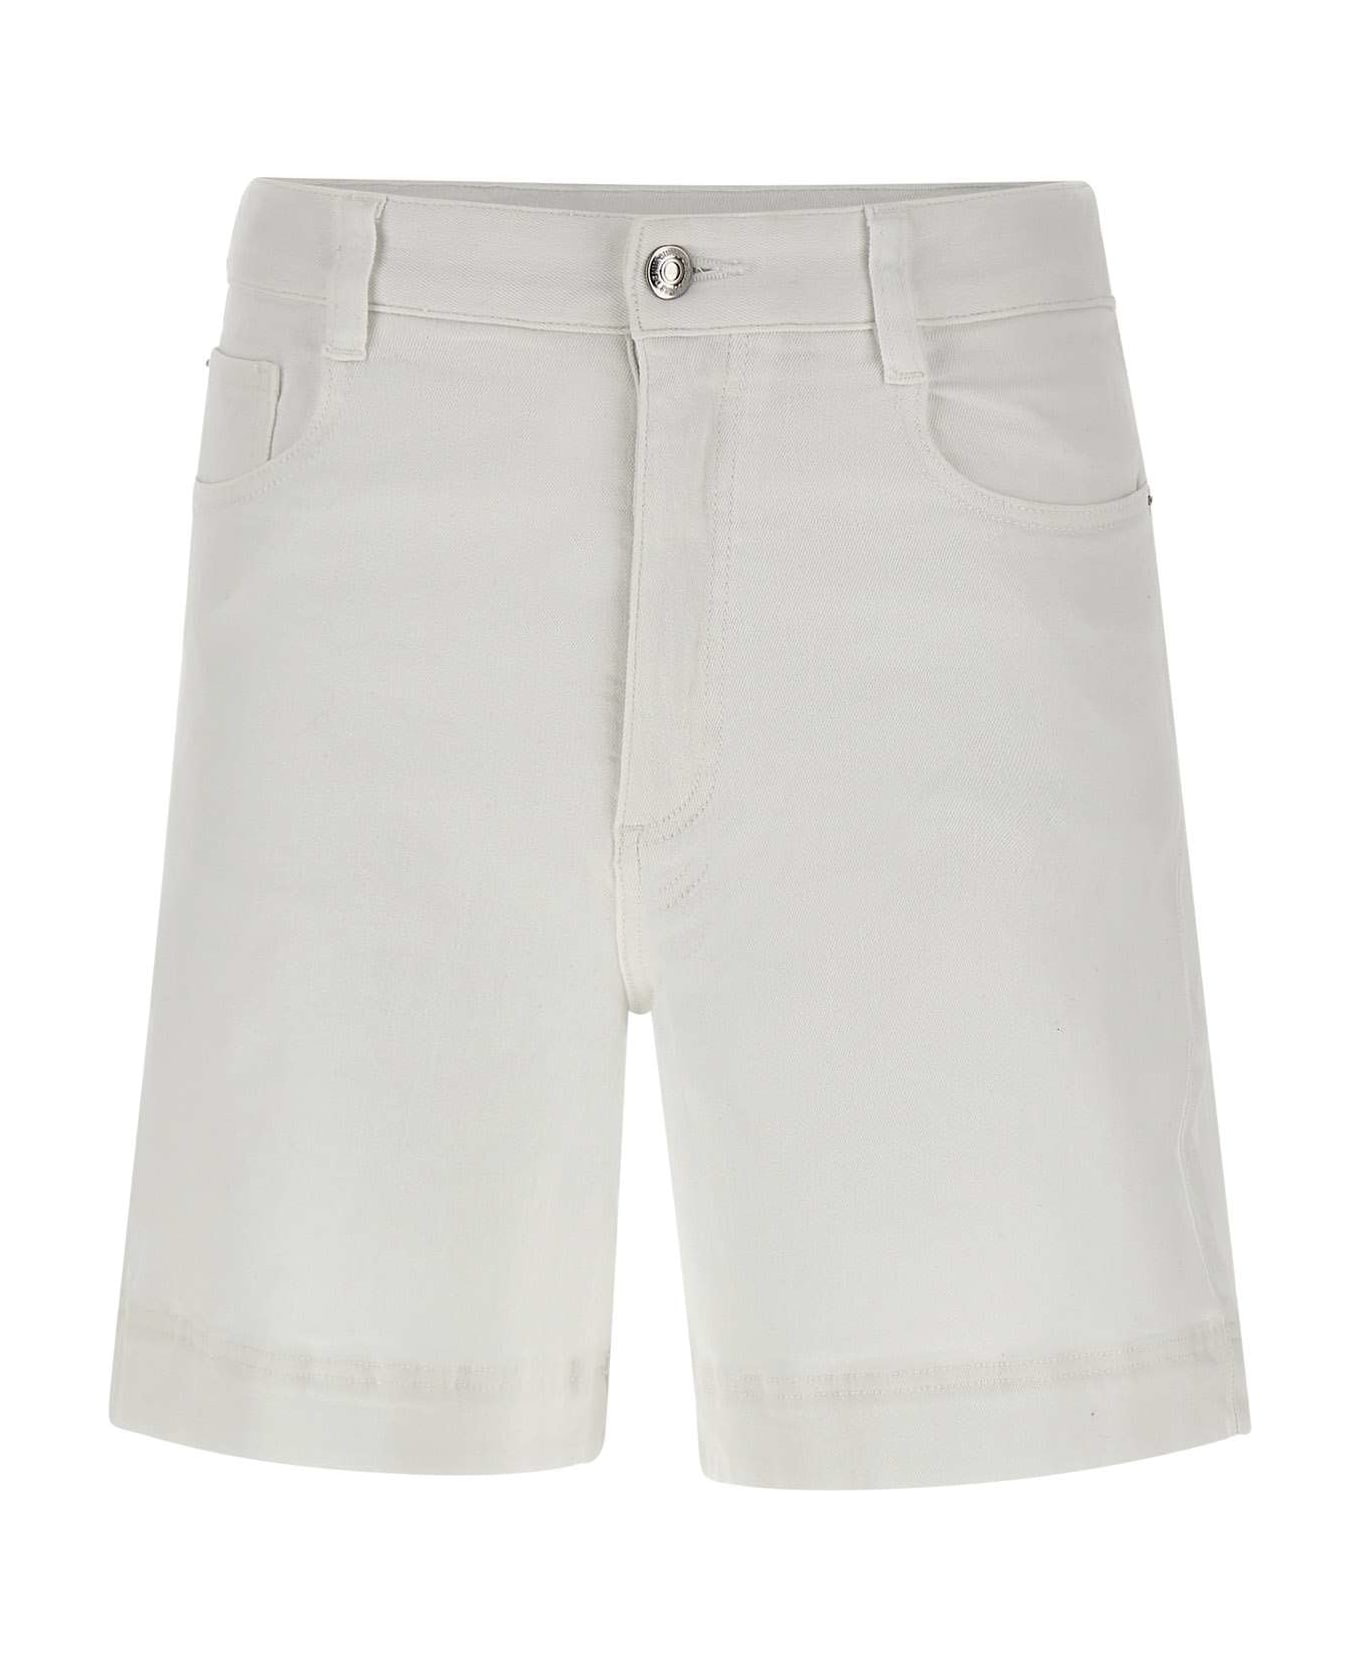 Sun 68 Cotton Shorts - WHITE